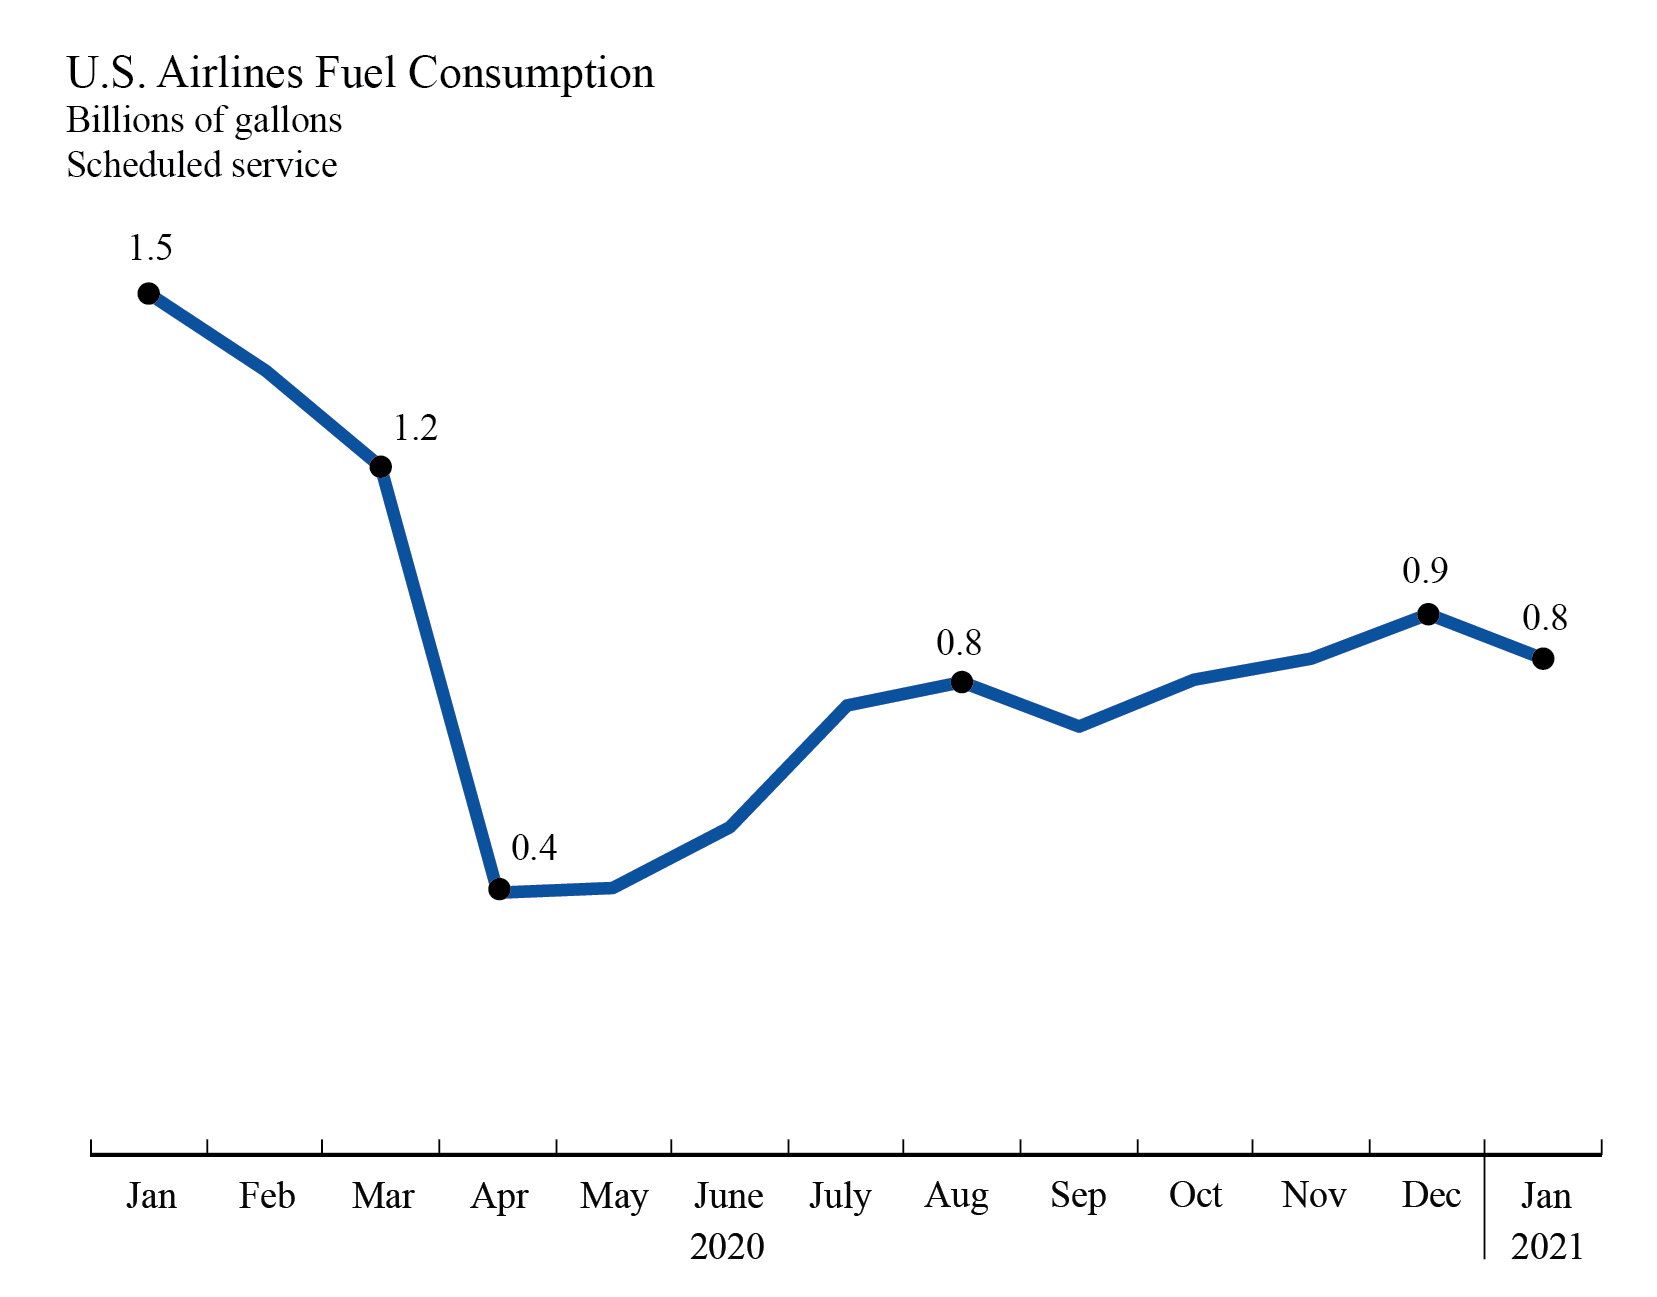 Jan 2021 Fuel Consumption 